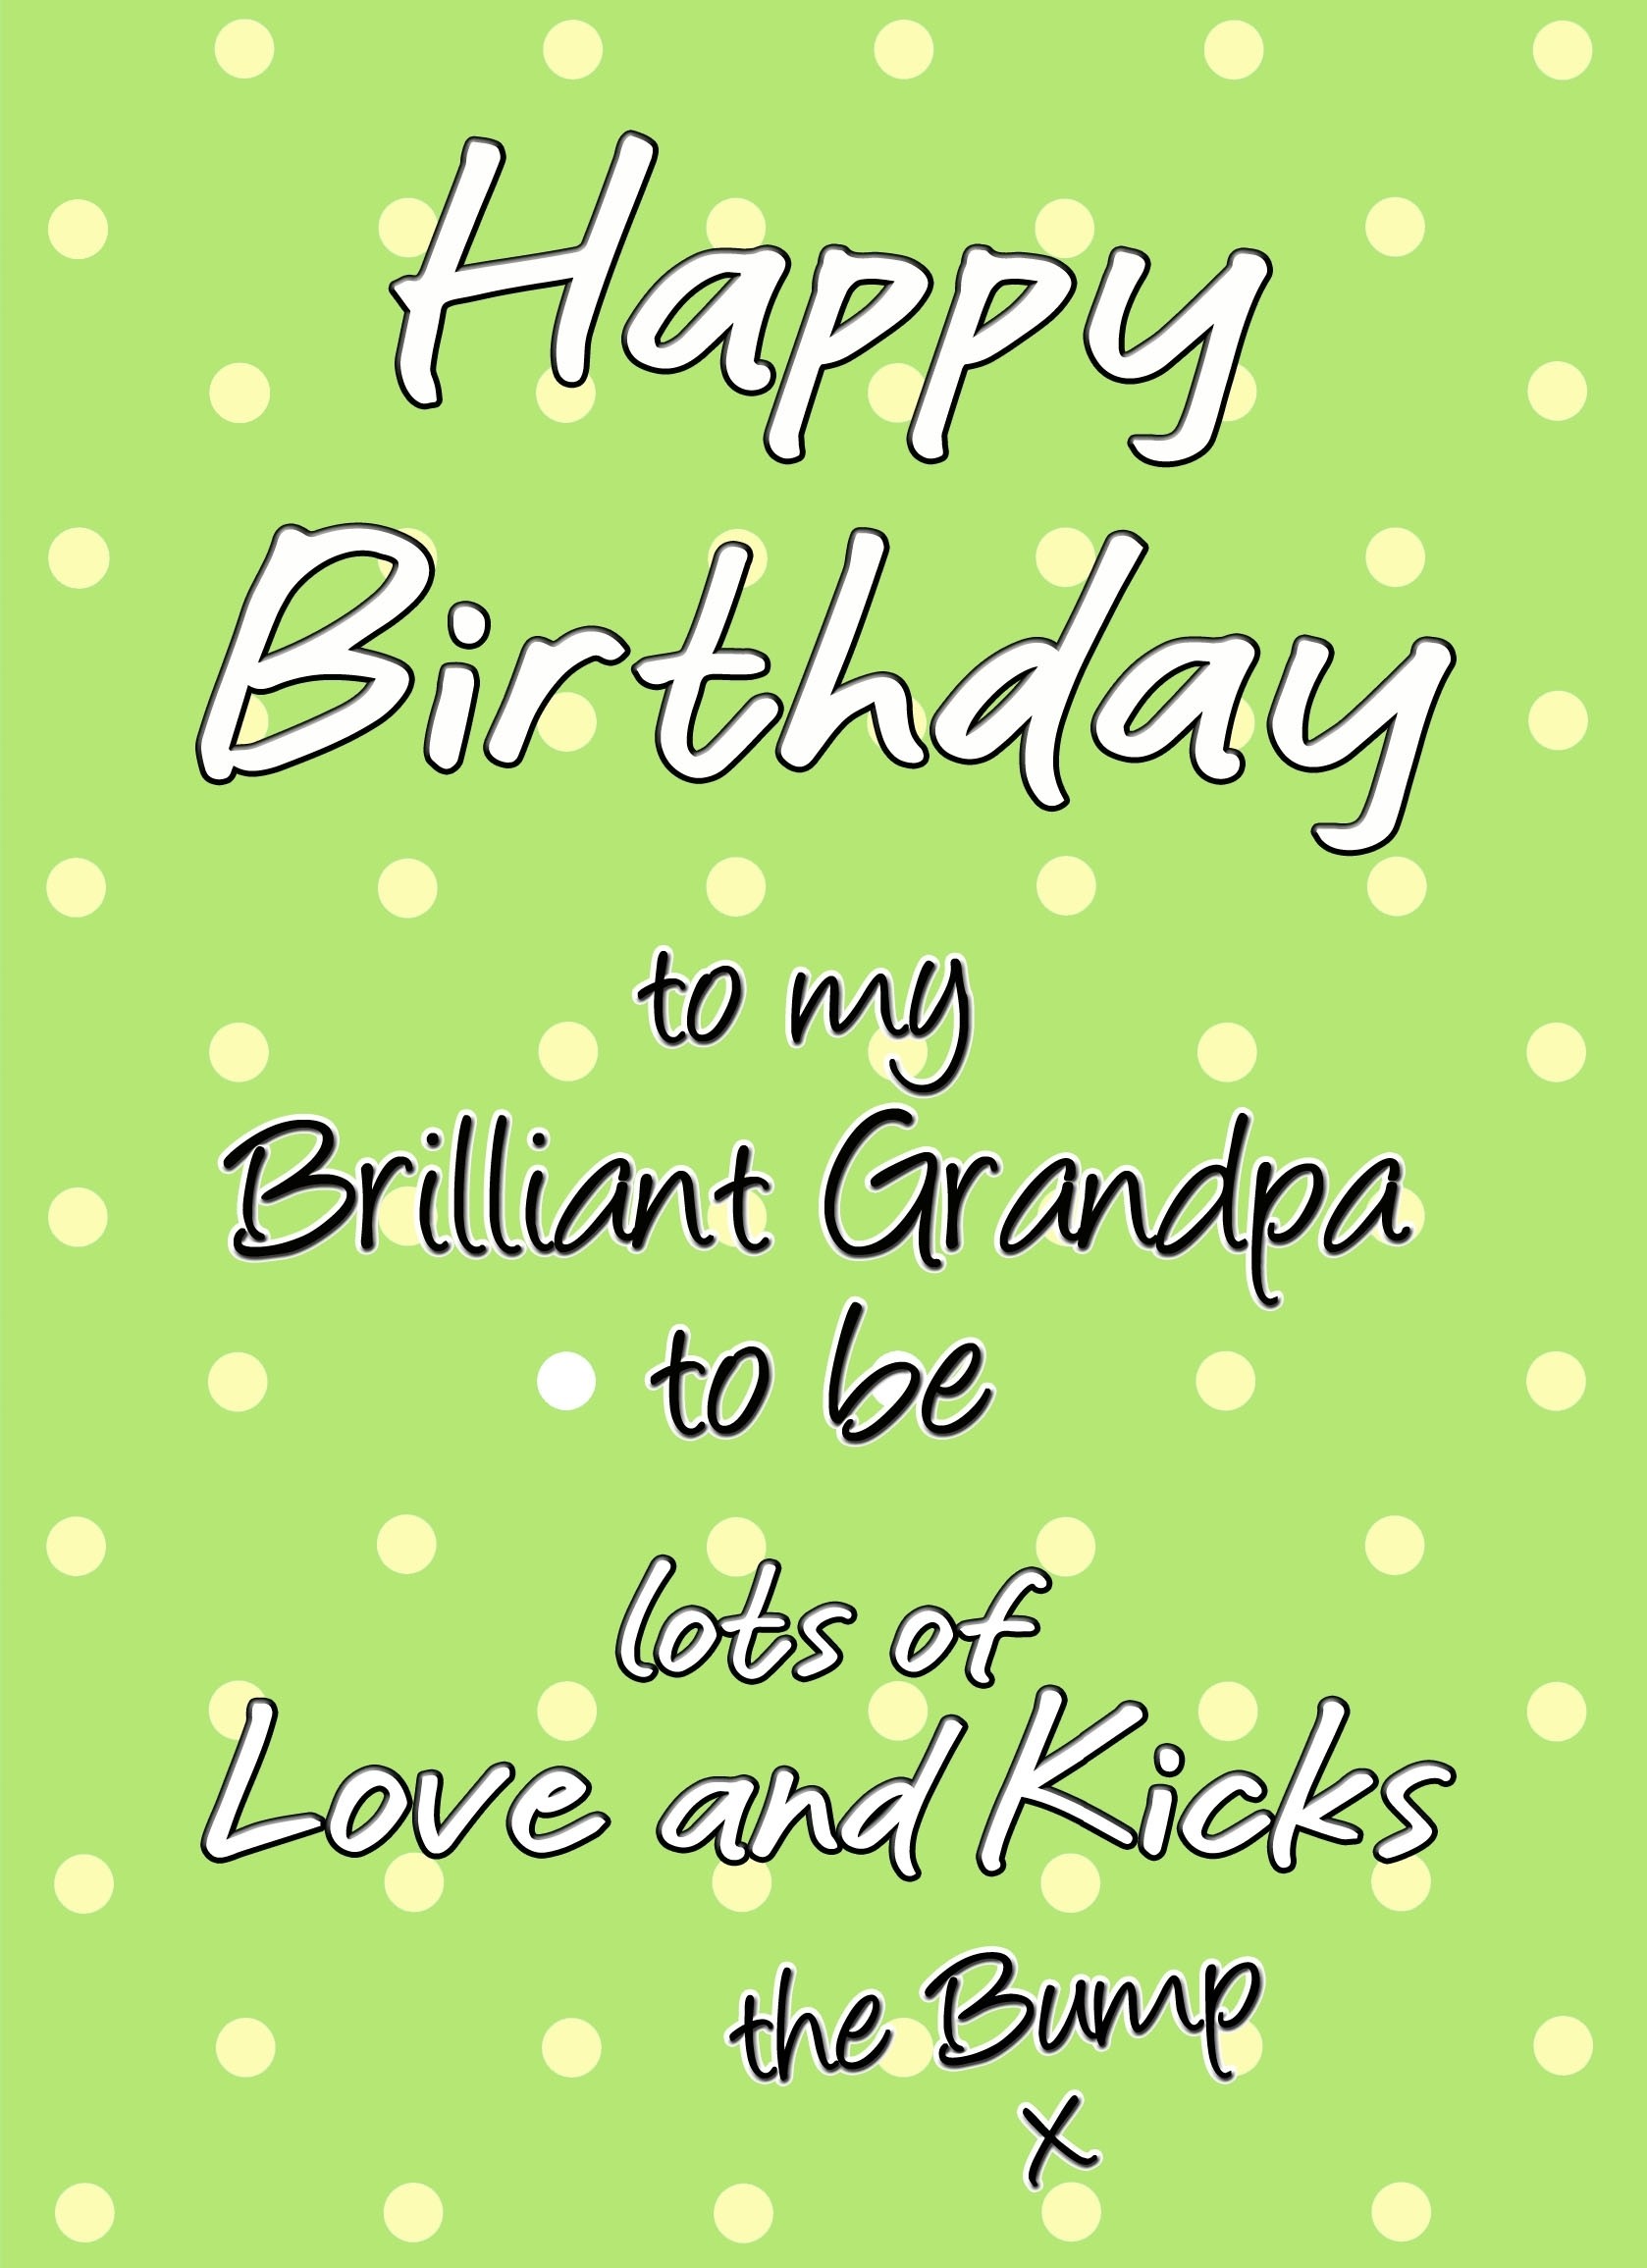 From The Bump Pregnancy Birthday Card (Grandpa, Green)